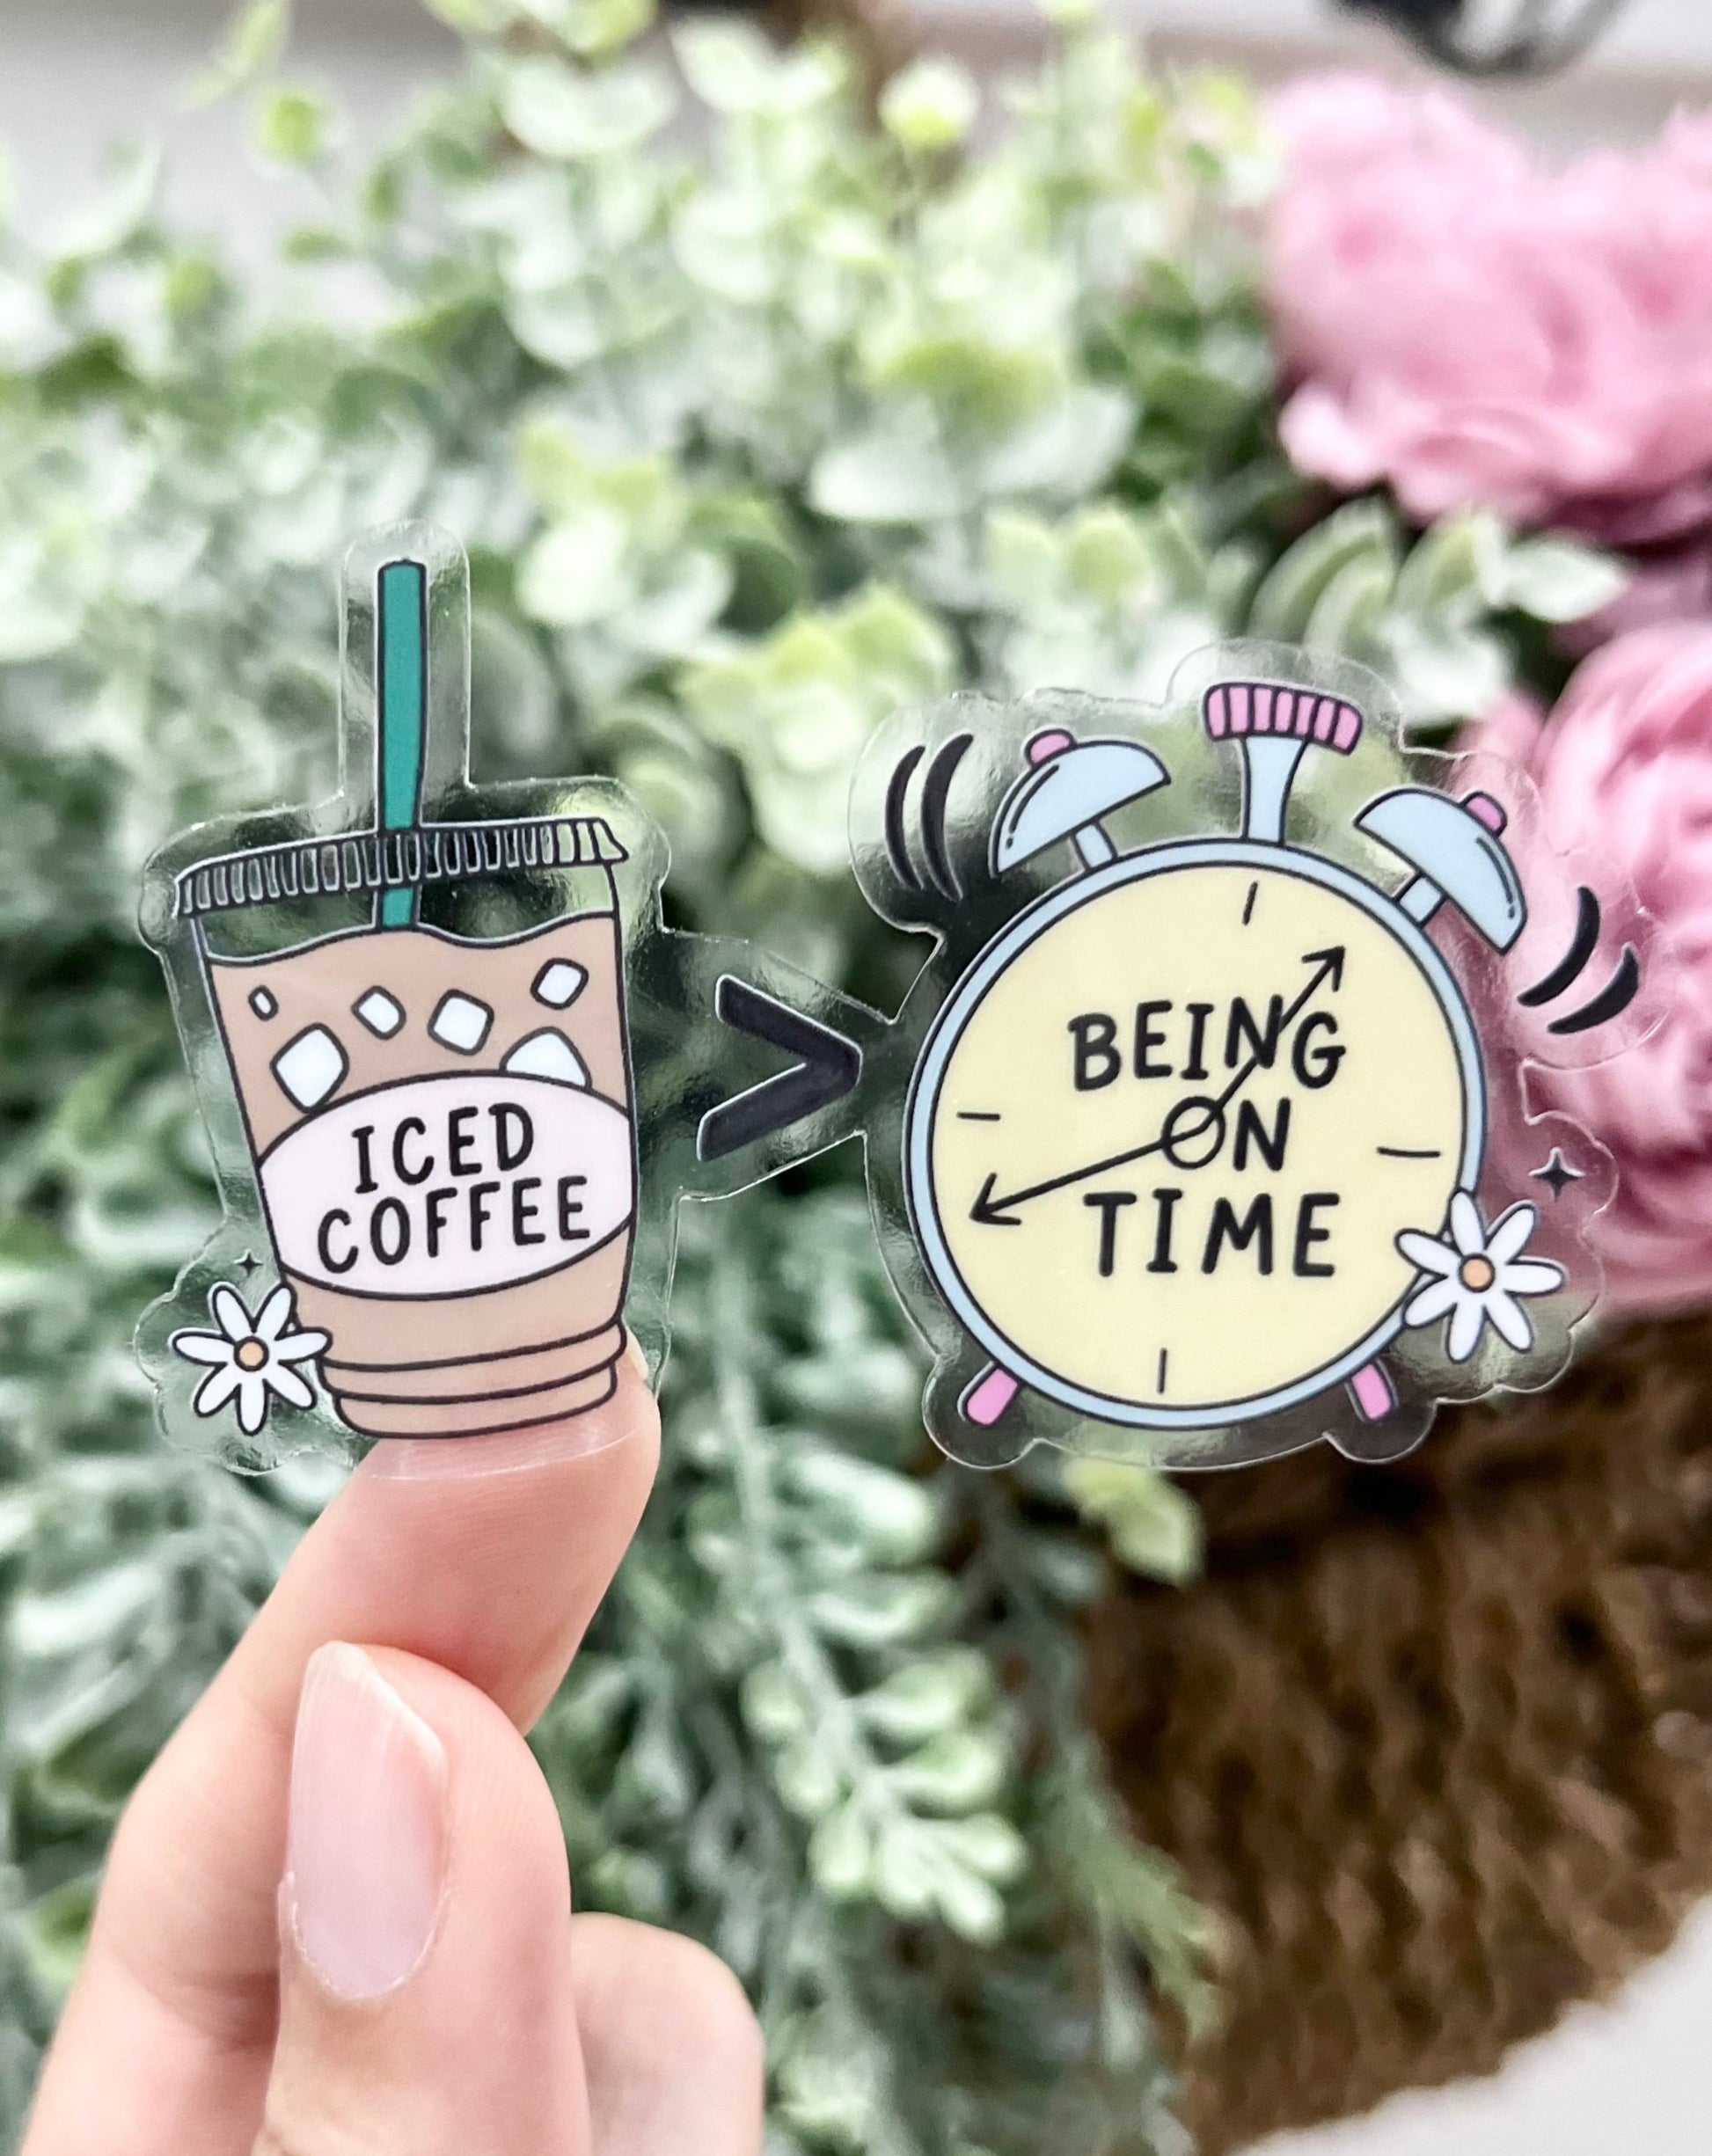 The Iced Coffee Sticker